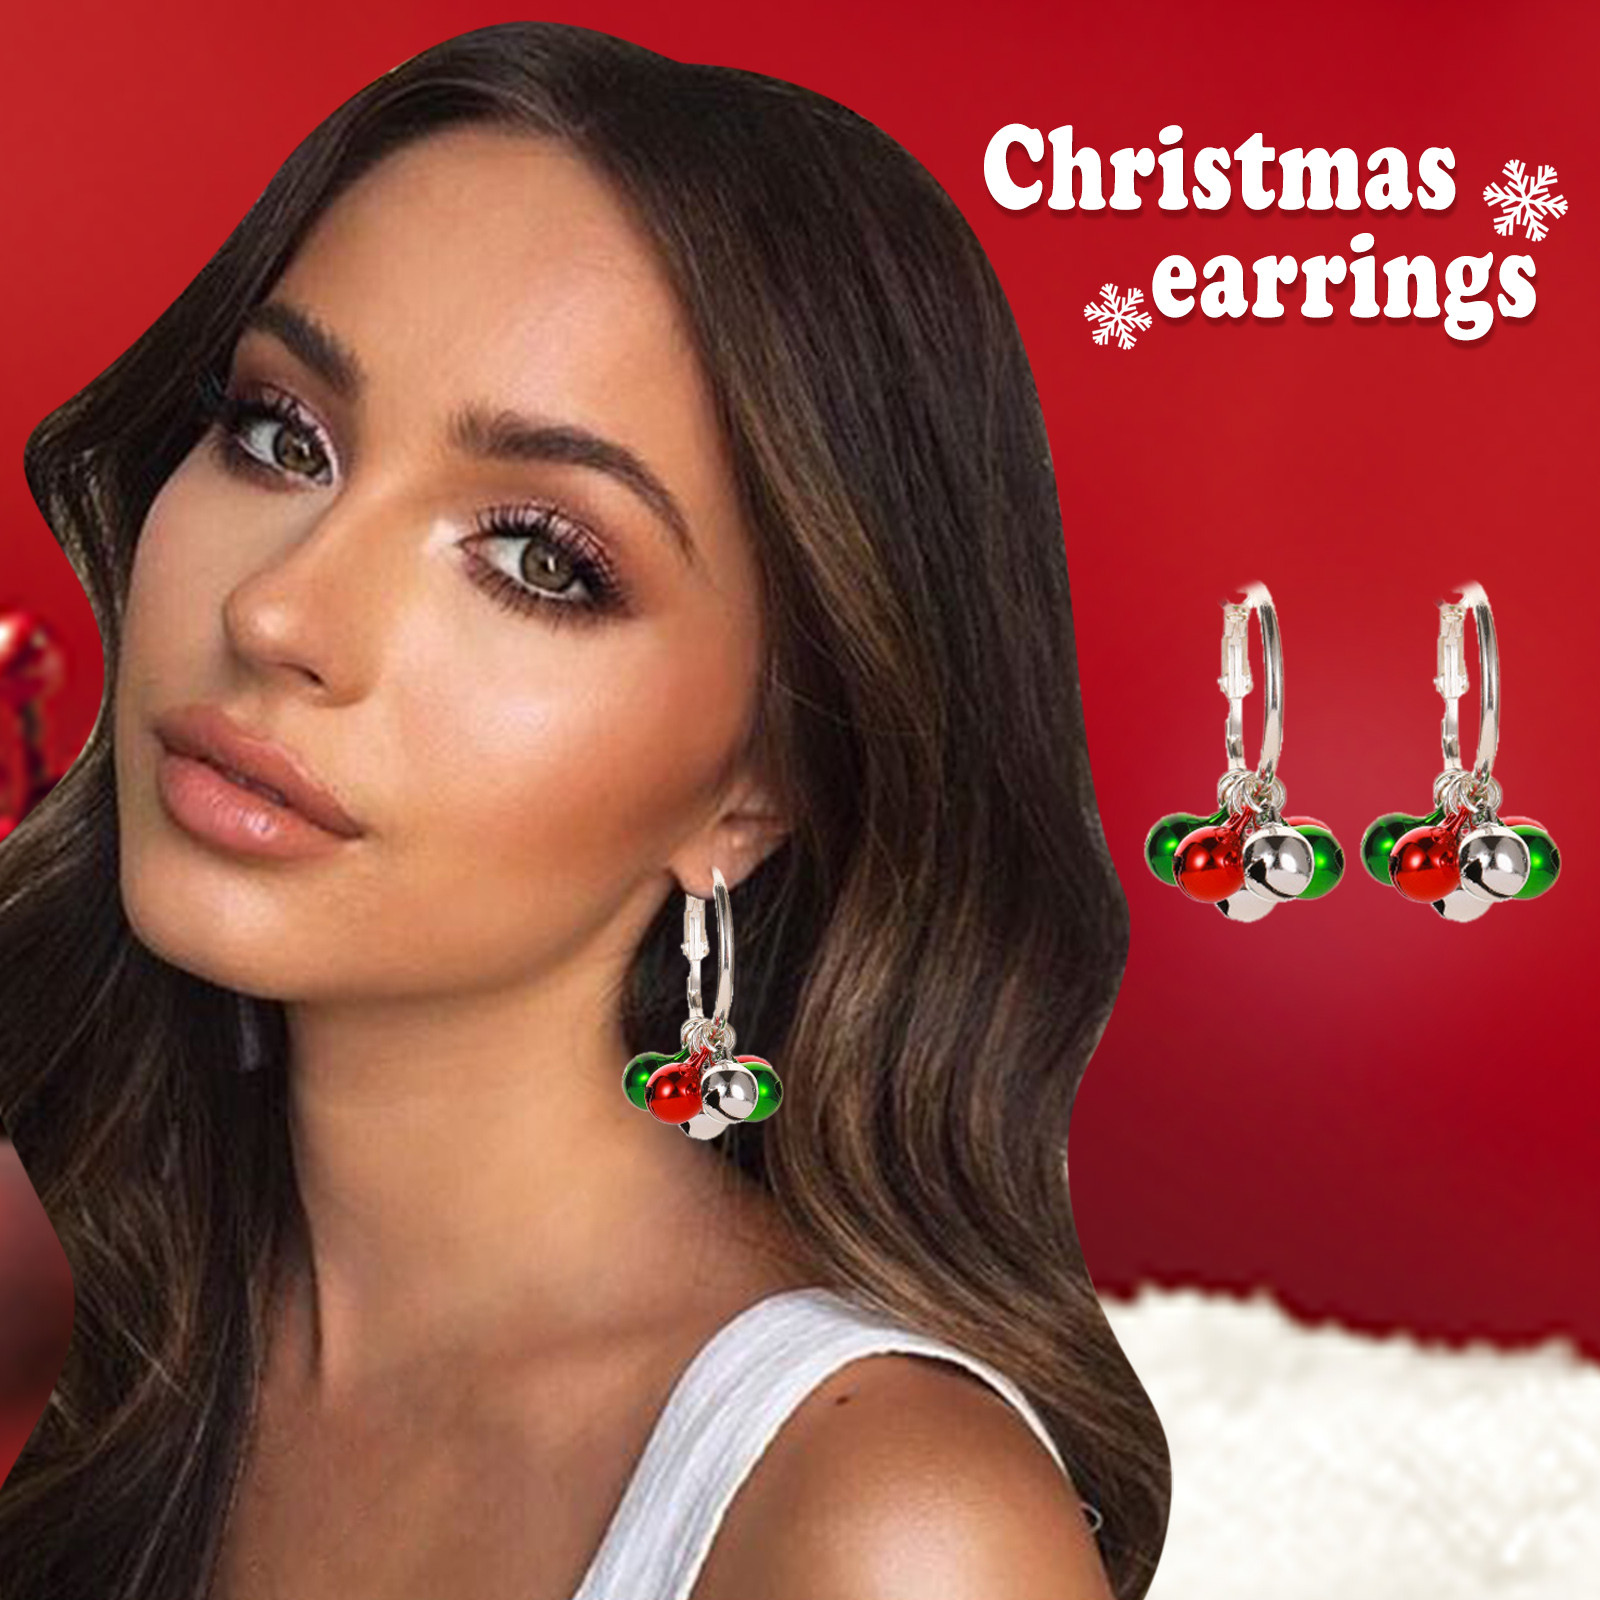 Kayannuo Back to School Clearance Women Fashion Earrings Christmas Earrings Cute Festive Jewelry Ear Wrap Christmas Gifts For Women - image 1 of 4